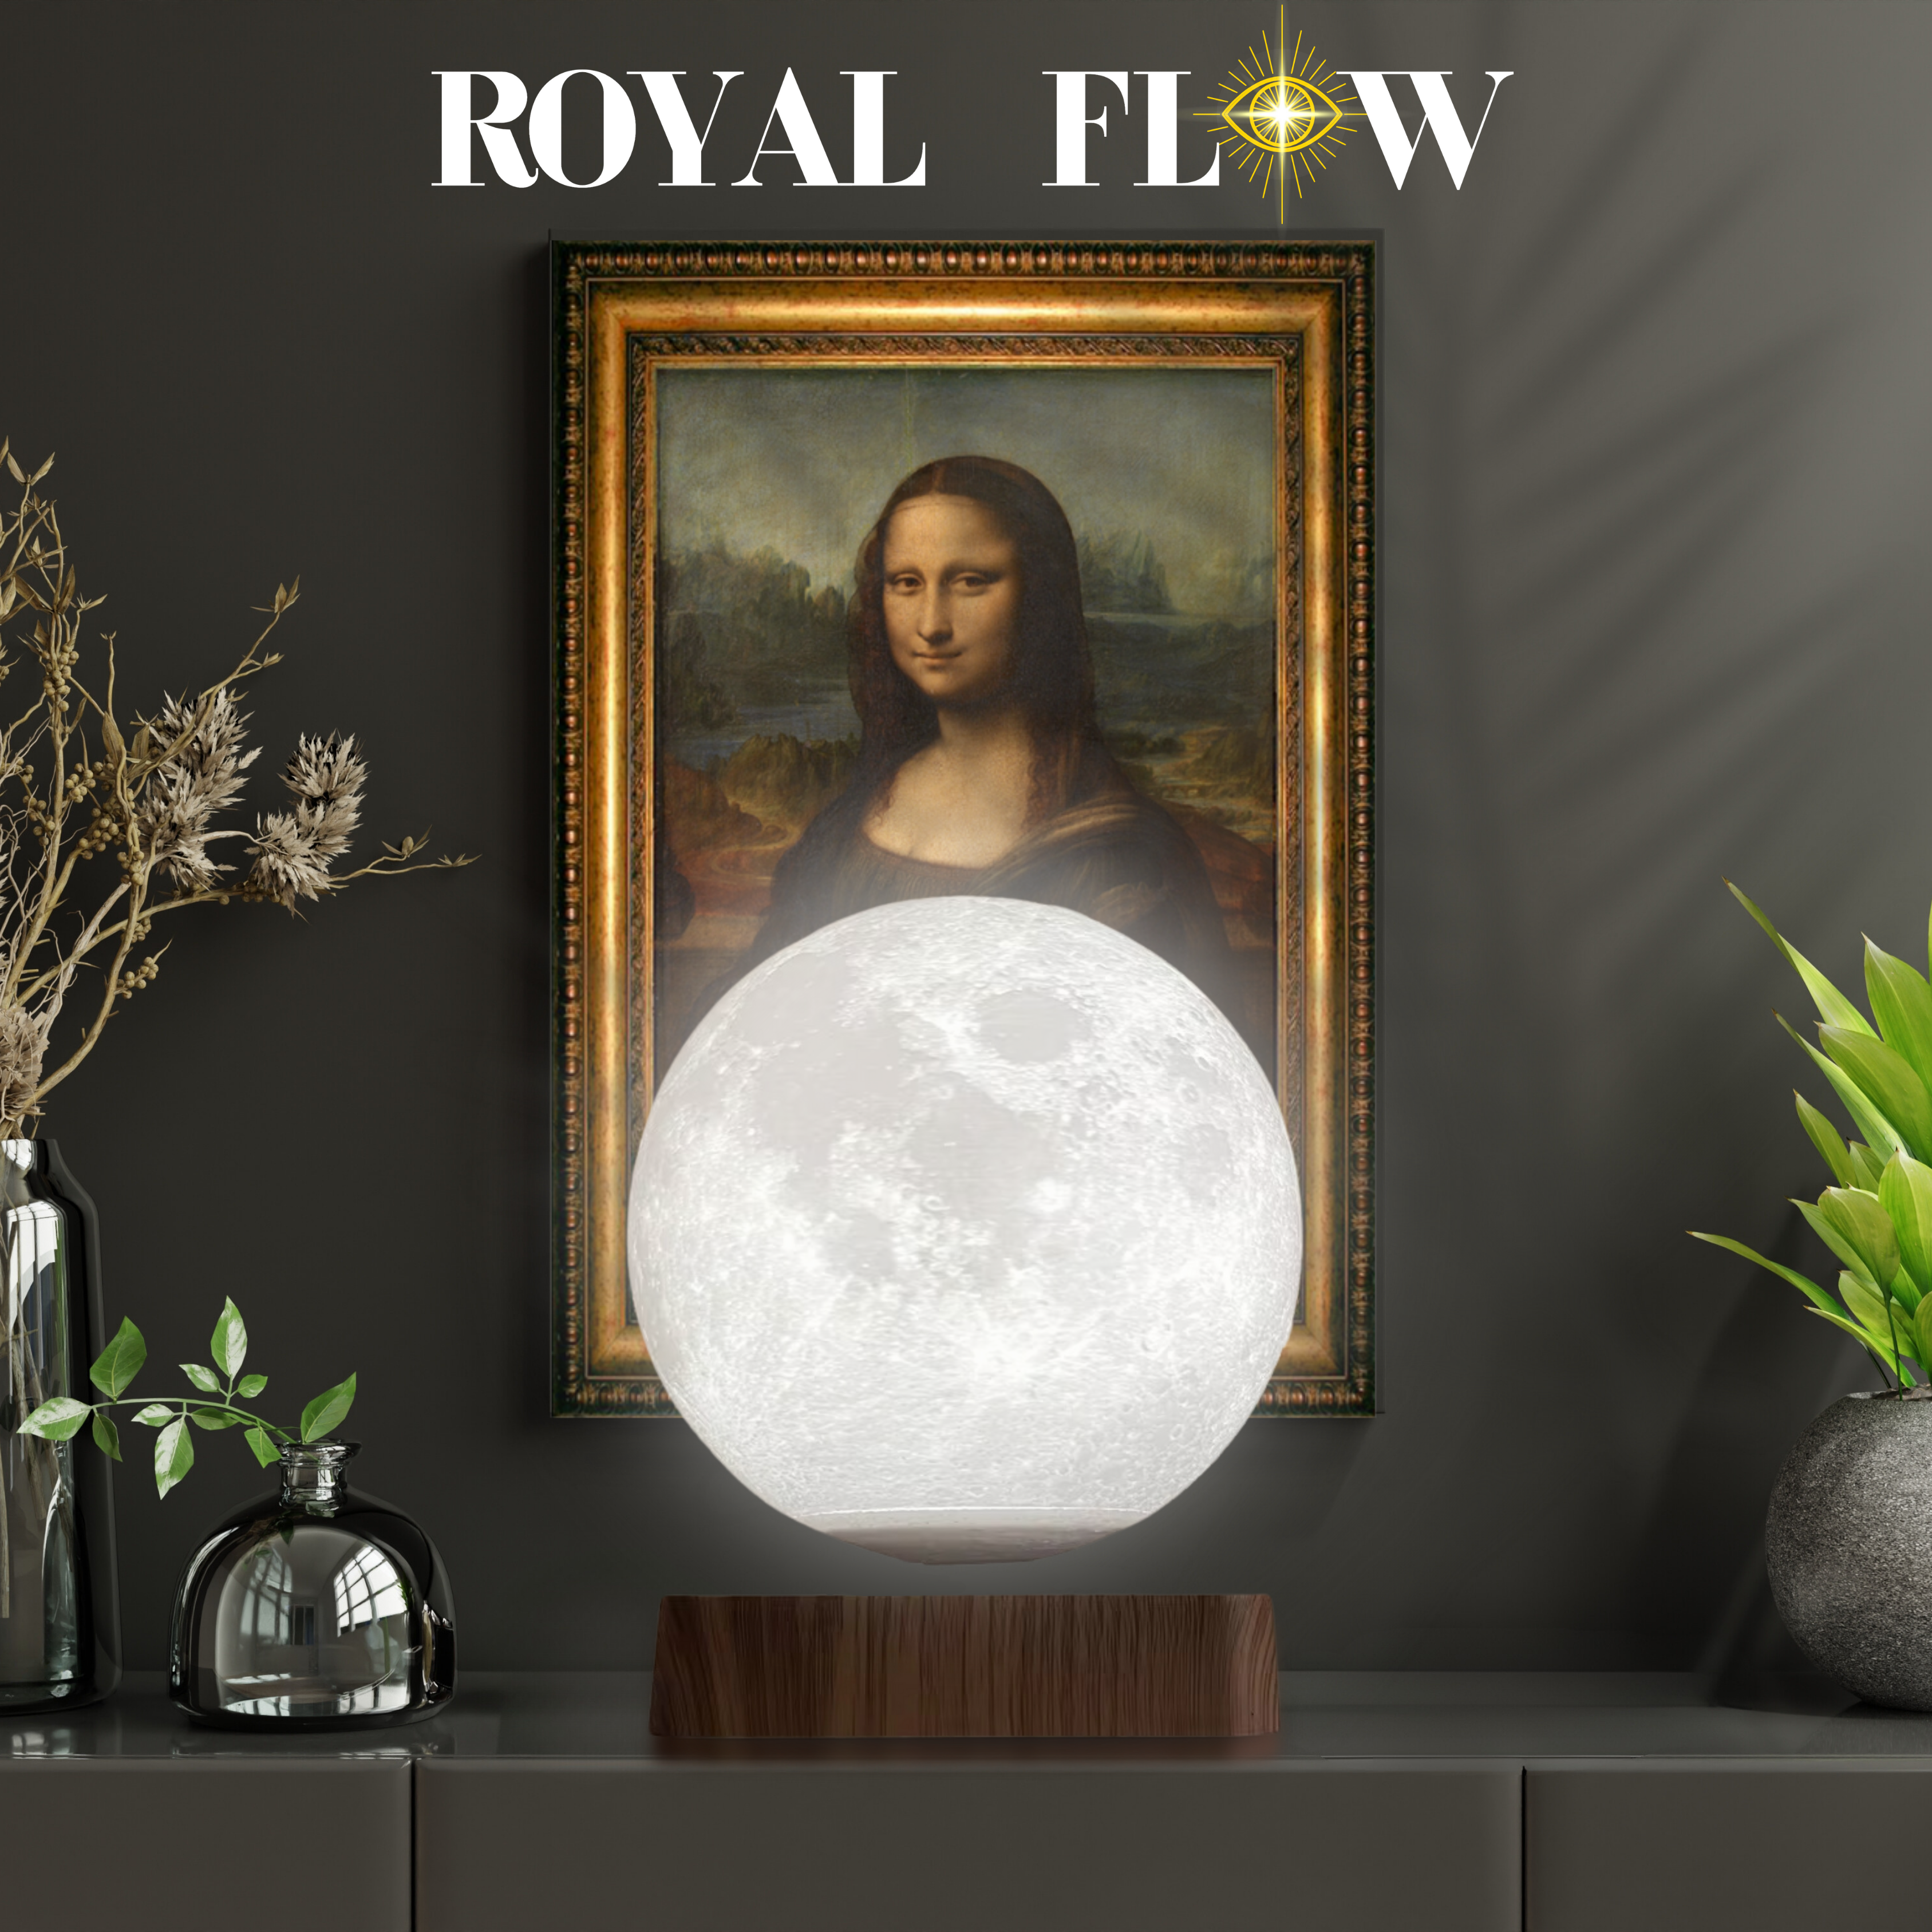 Royal Flow™ Meditation Levitating Moon Lamp